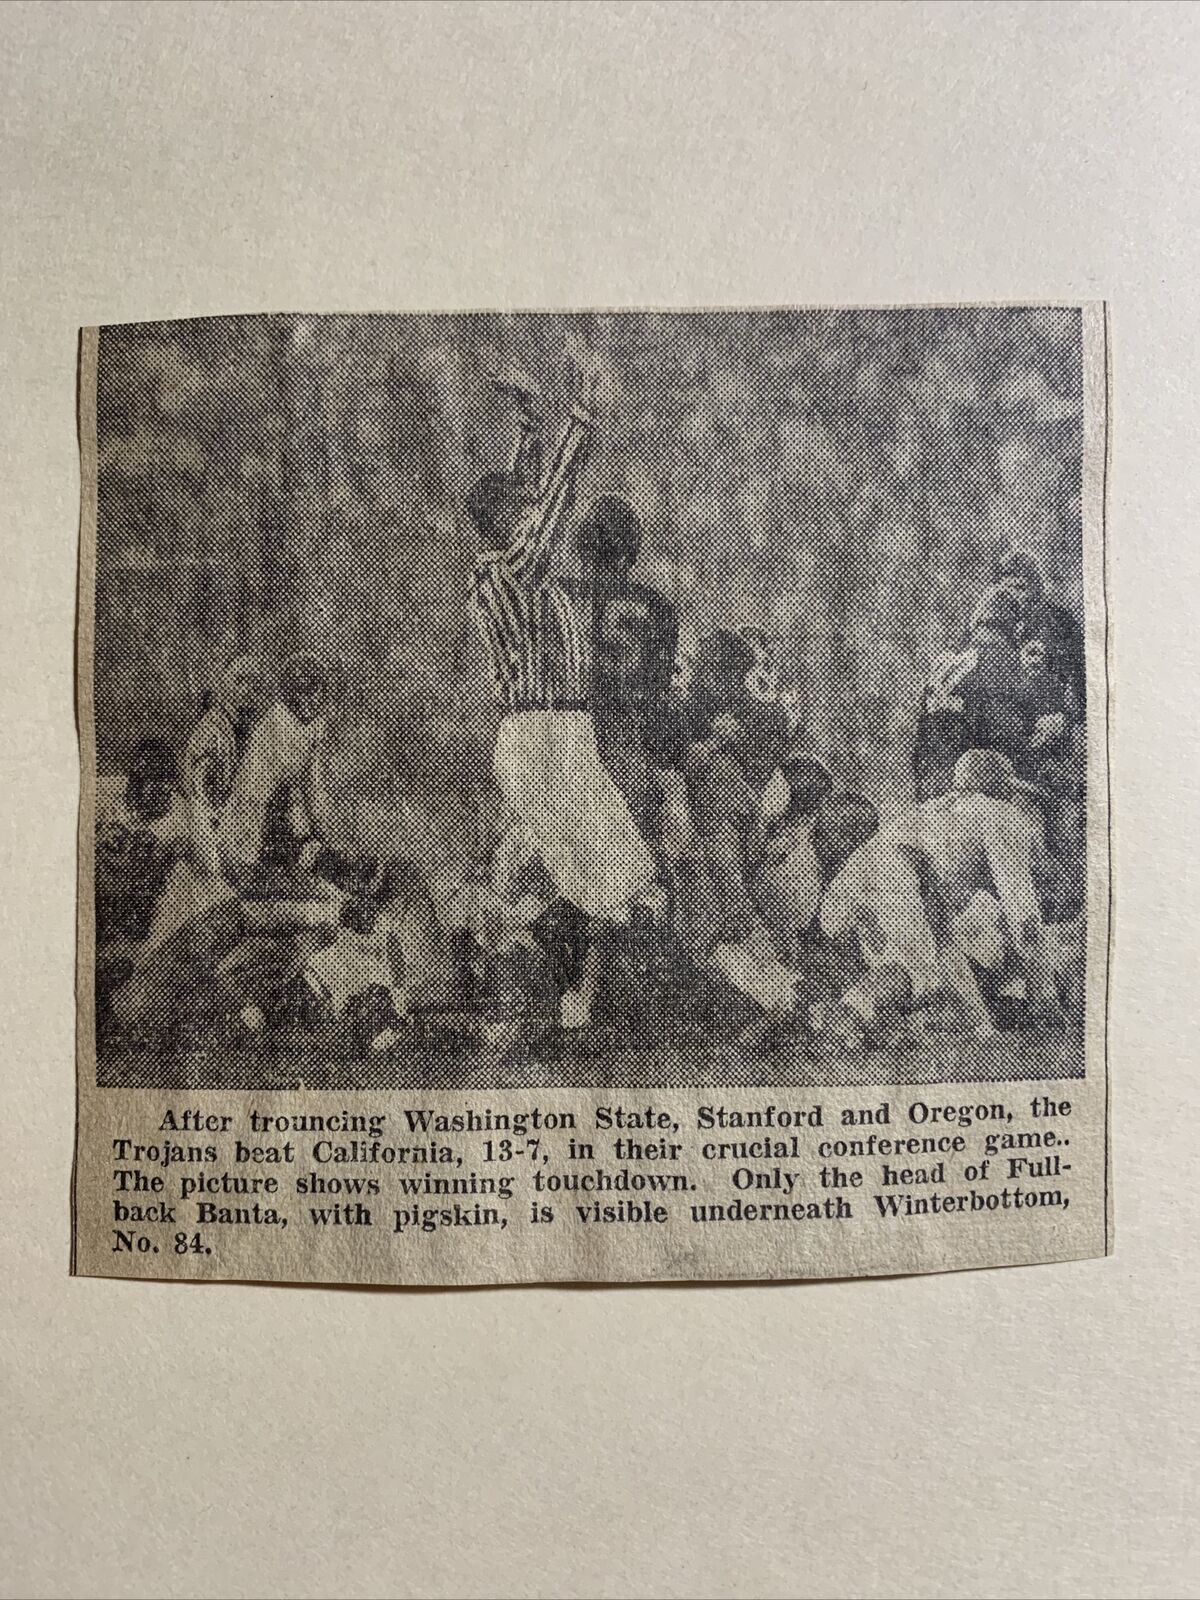 USC Jack Banta California Bud Winterbottom 1939 Sporting News Football 4X4 Panel